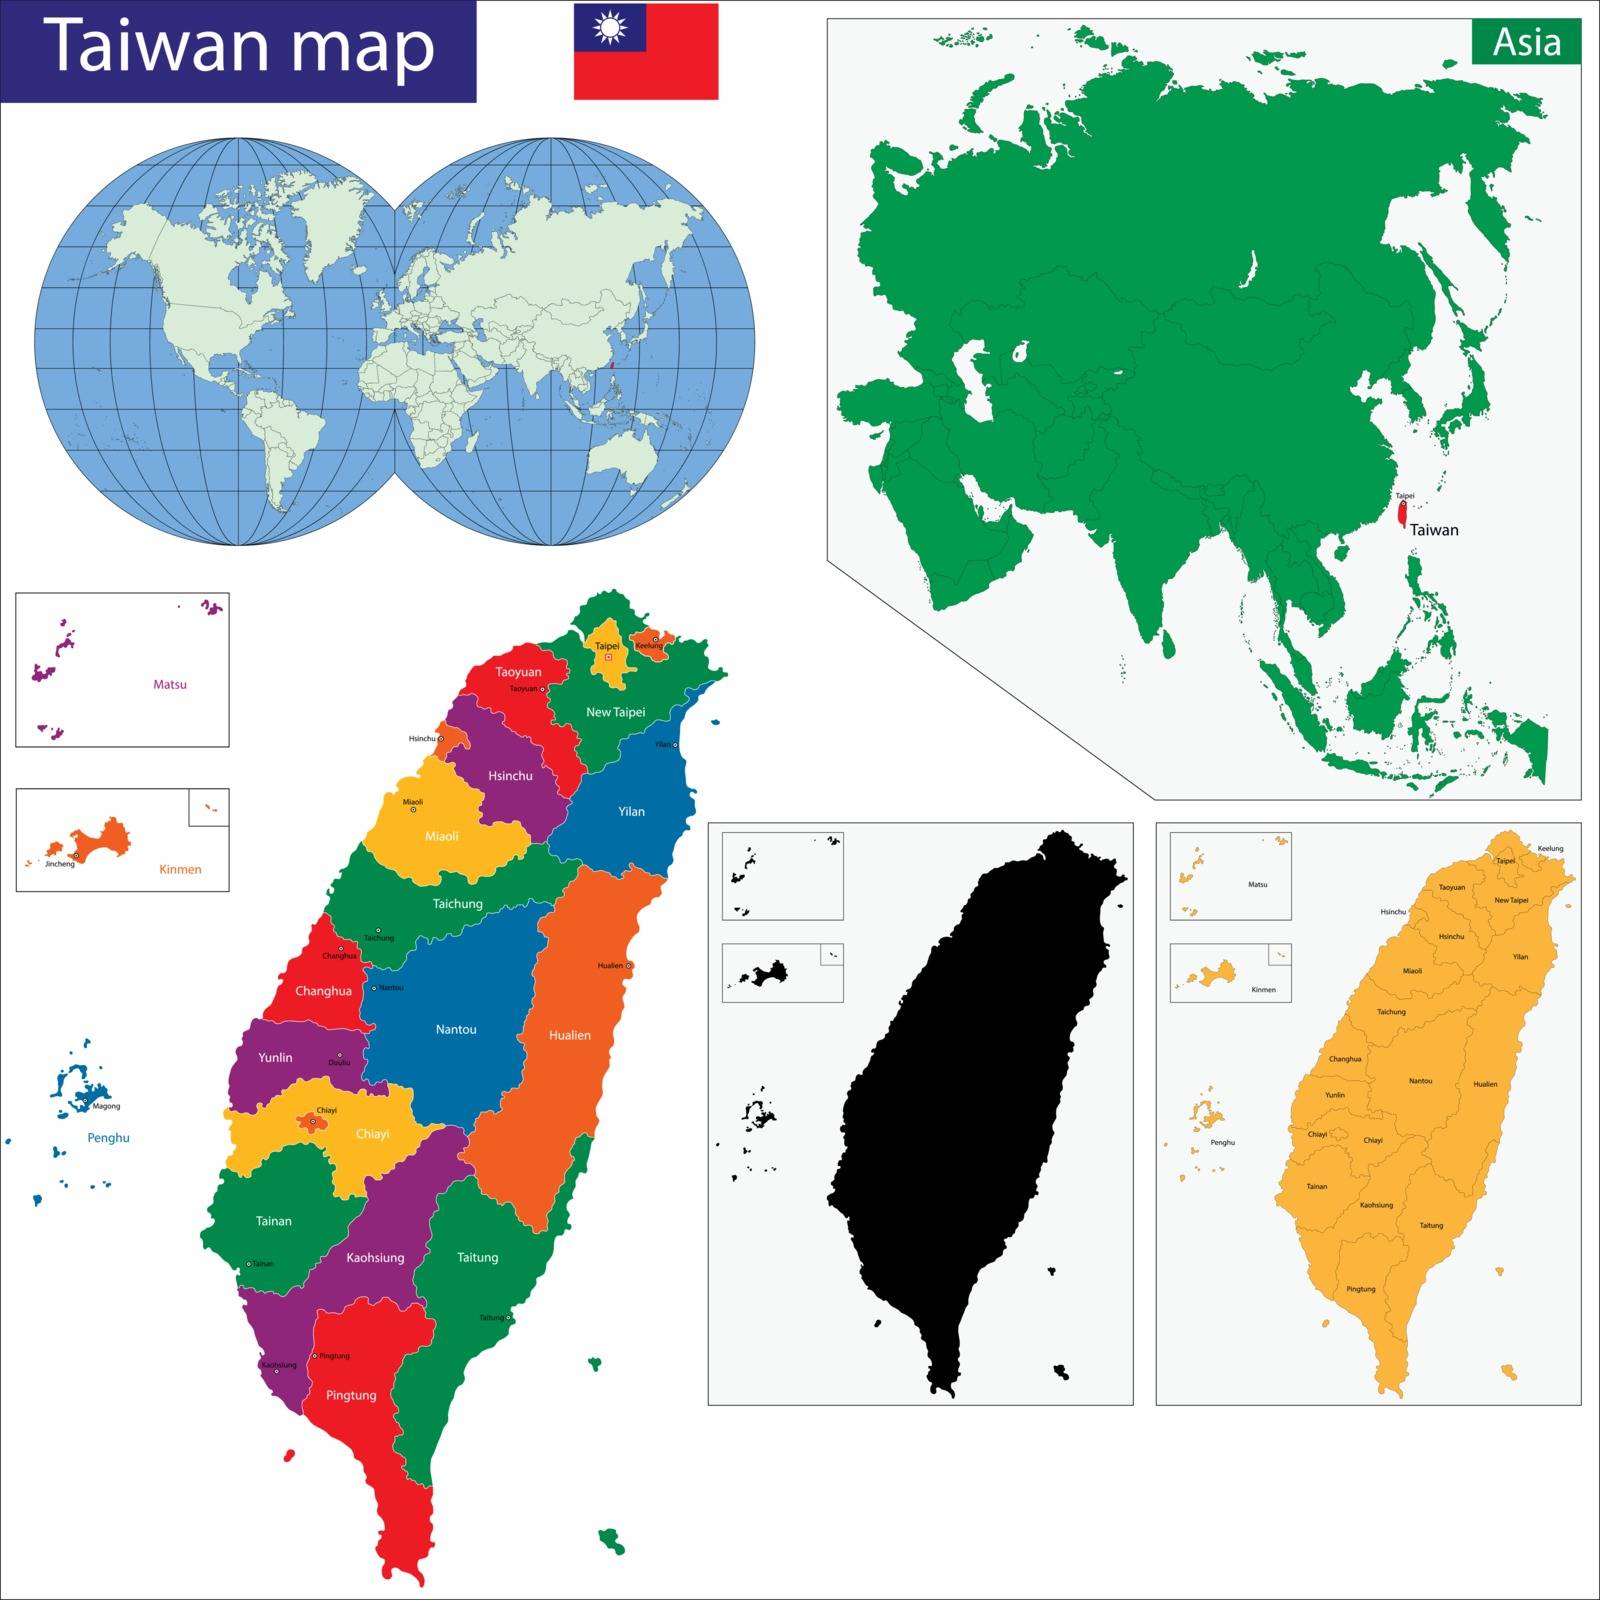 Taiwan map by Volina